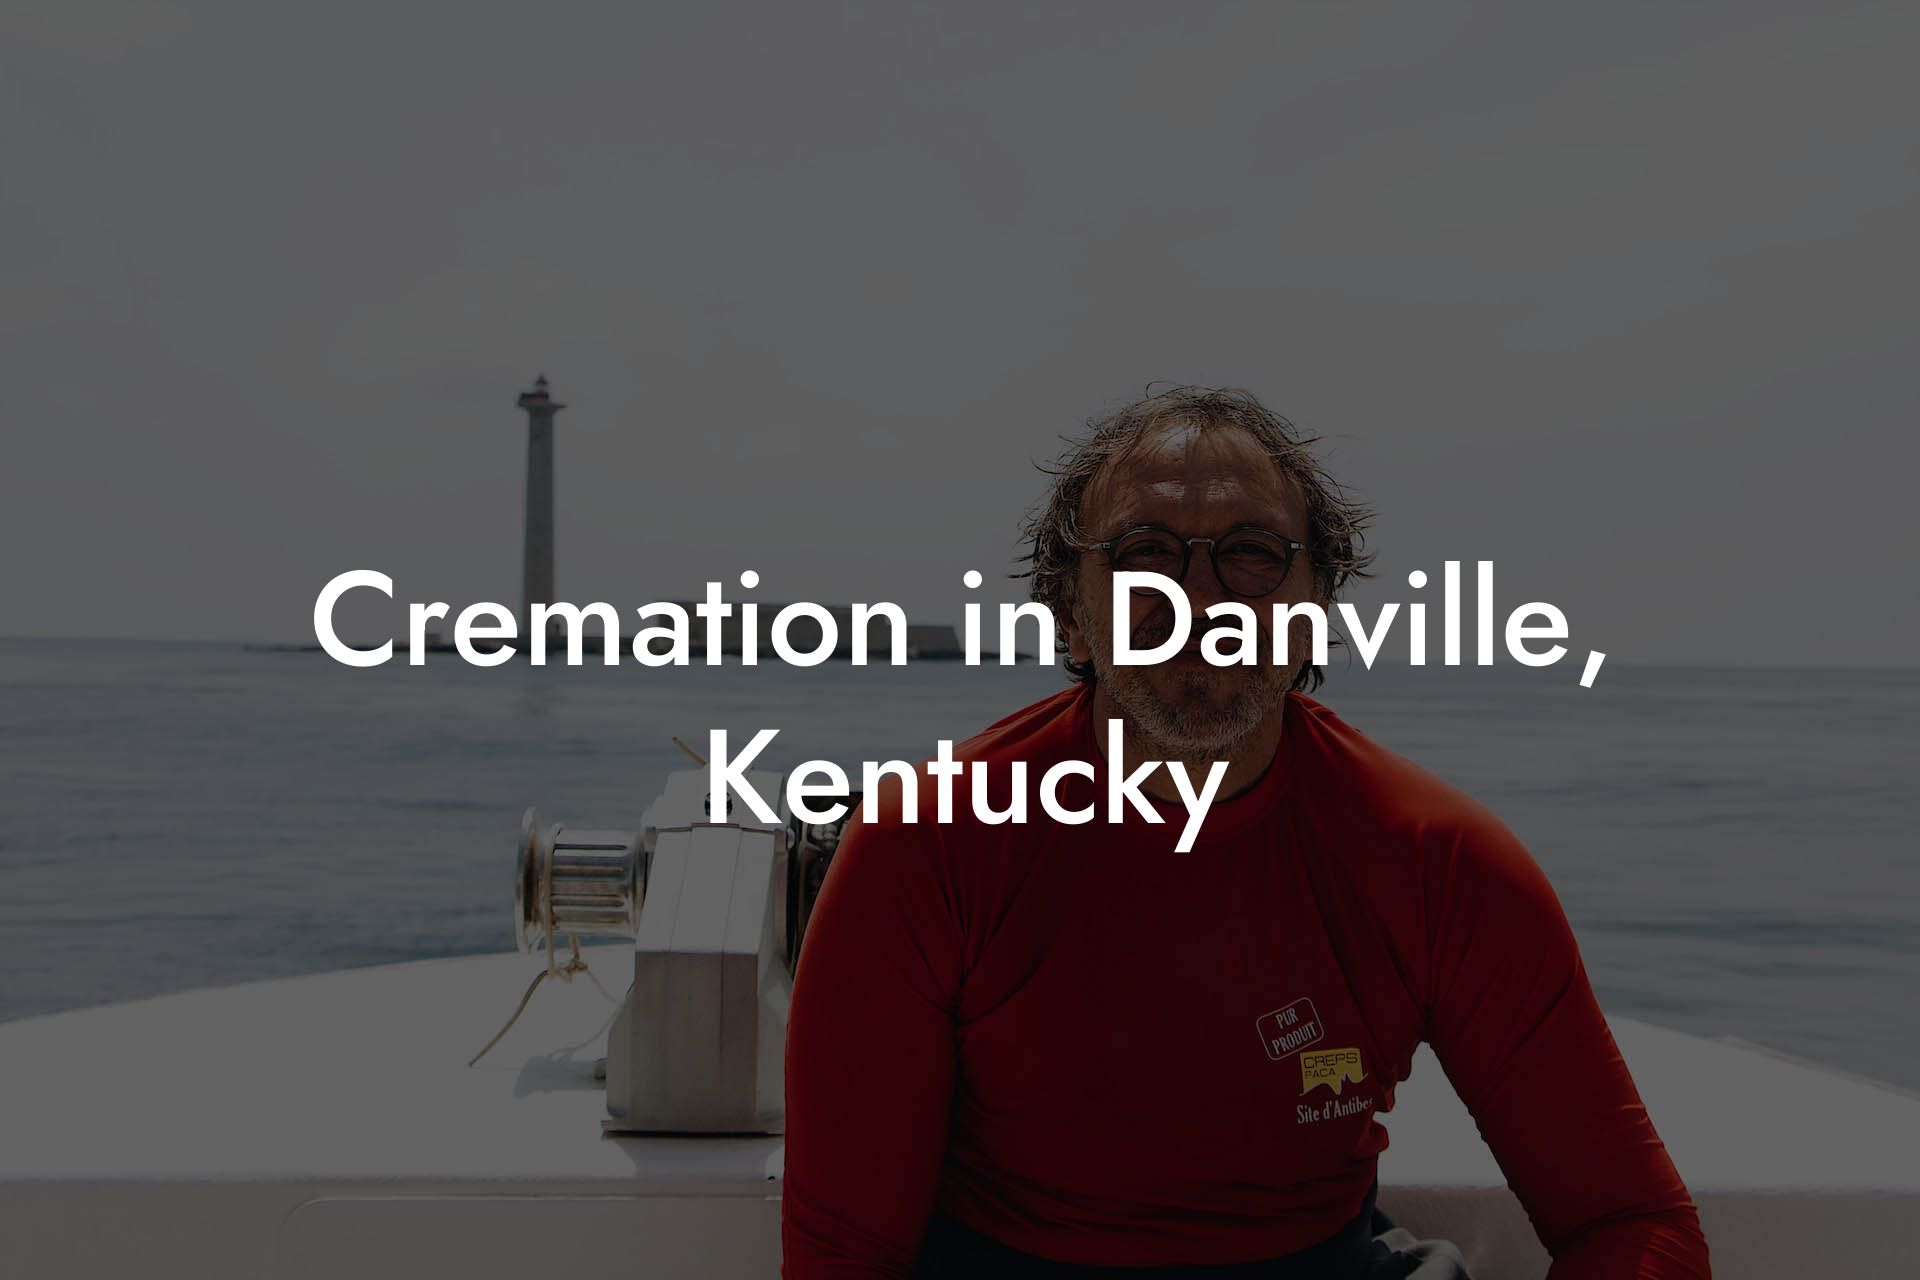 Cremation in Danville, Kentucky